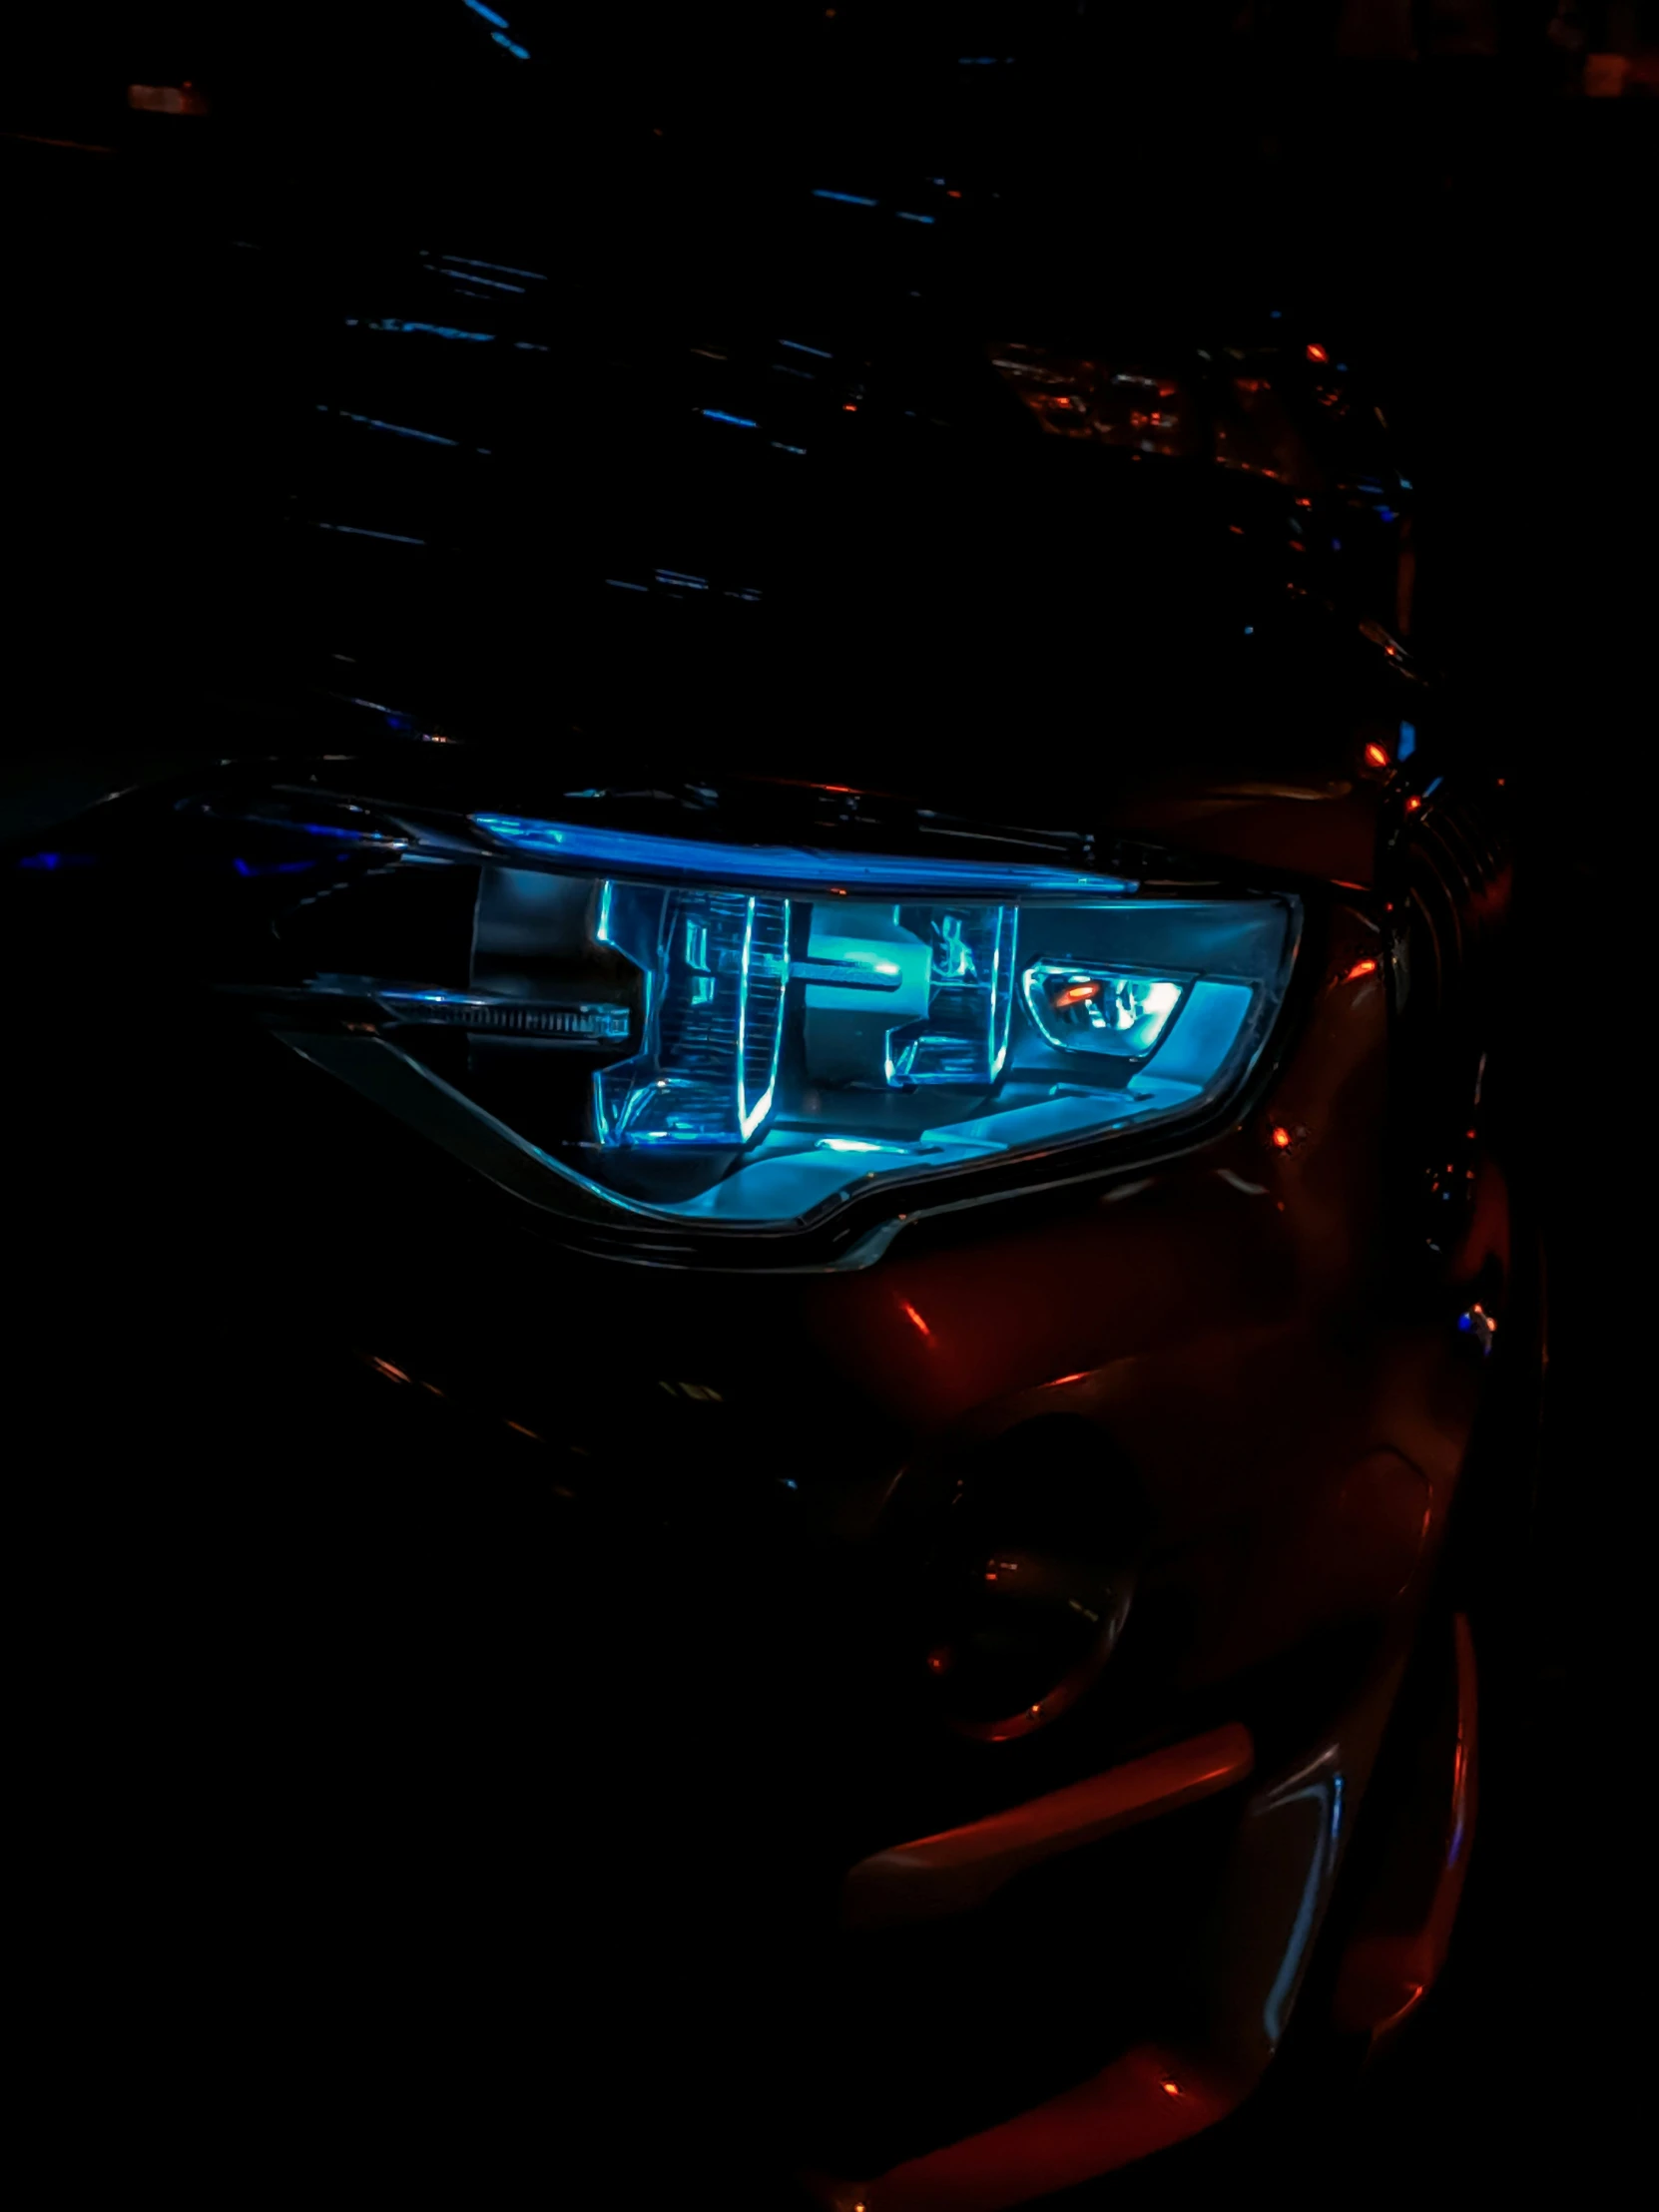 a car's headlight is shown in the dark